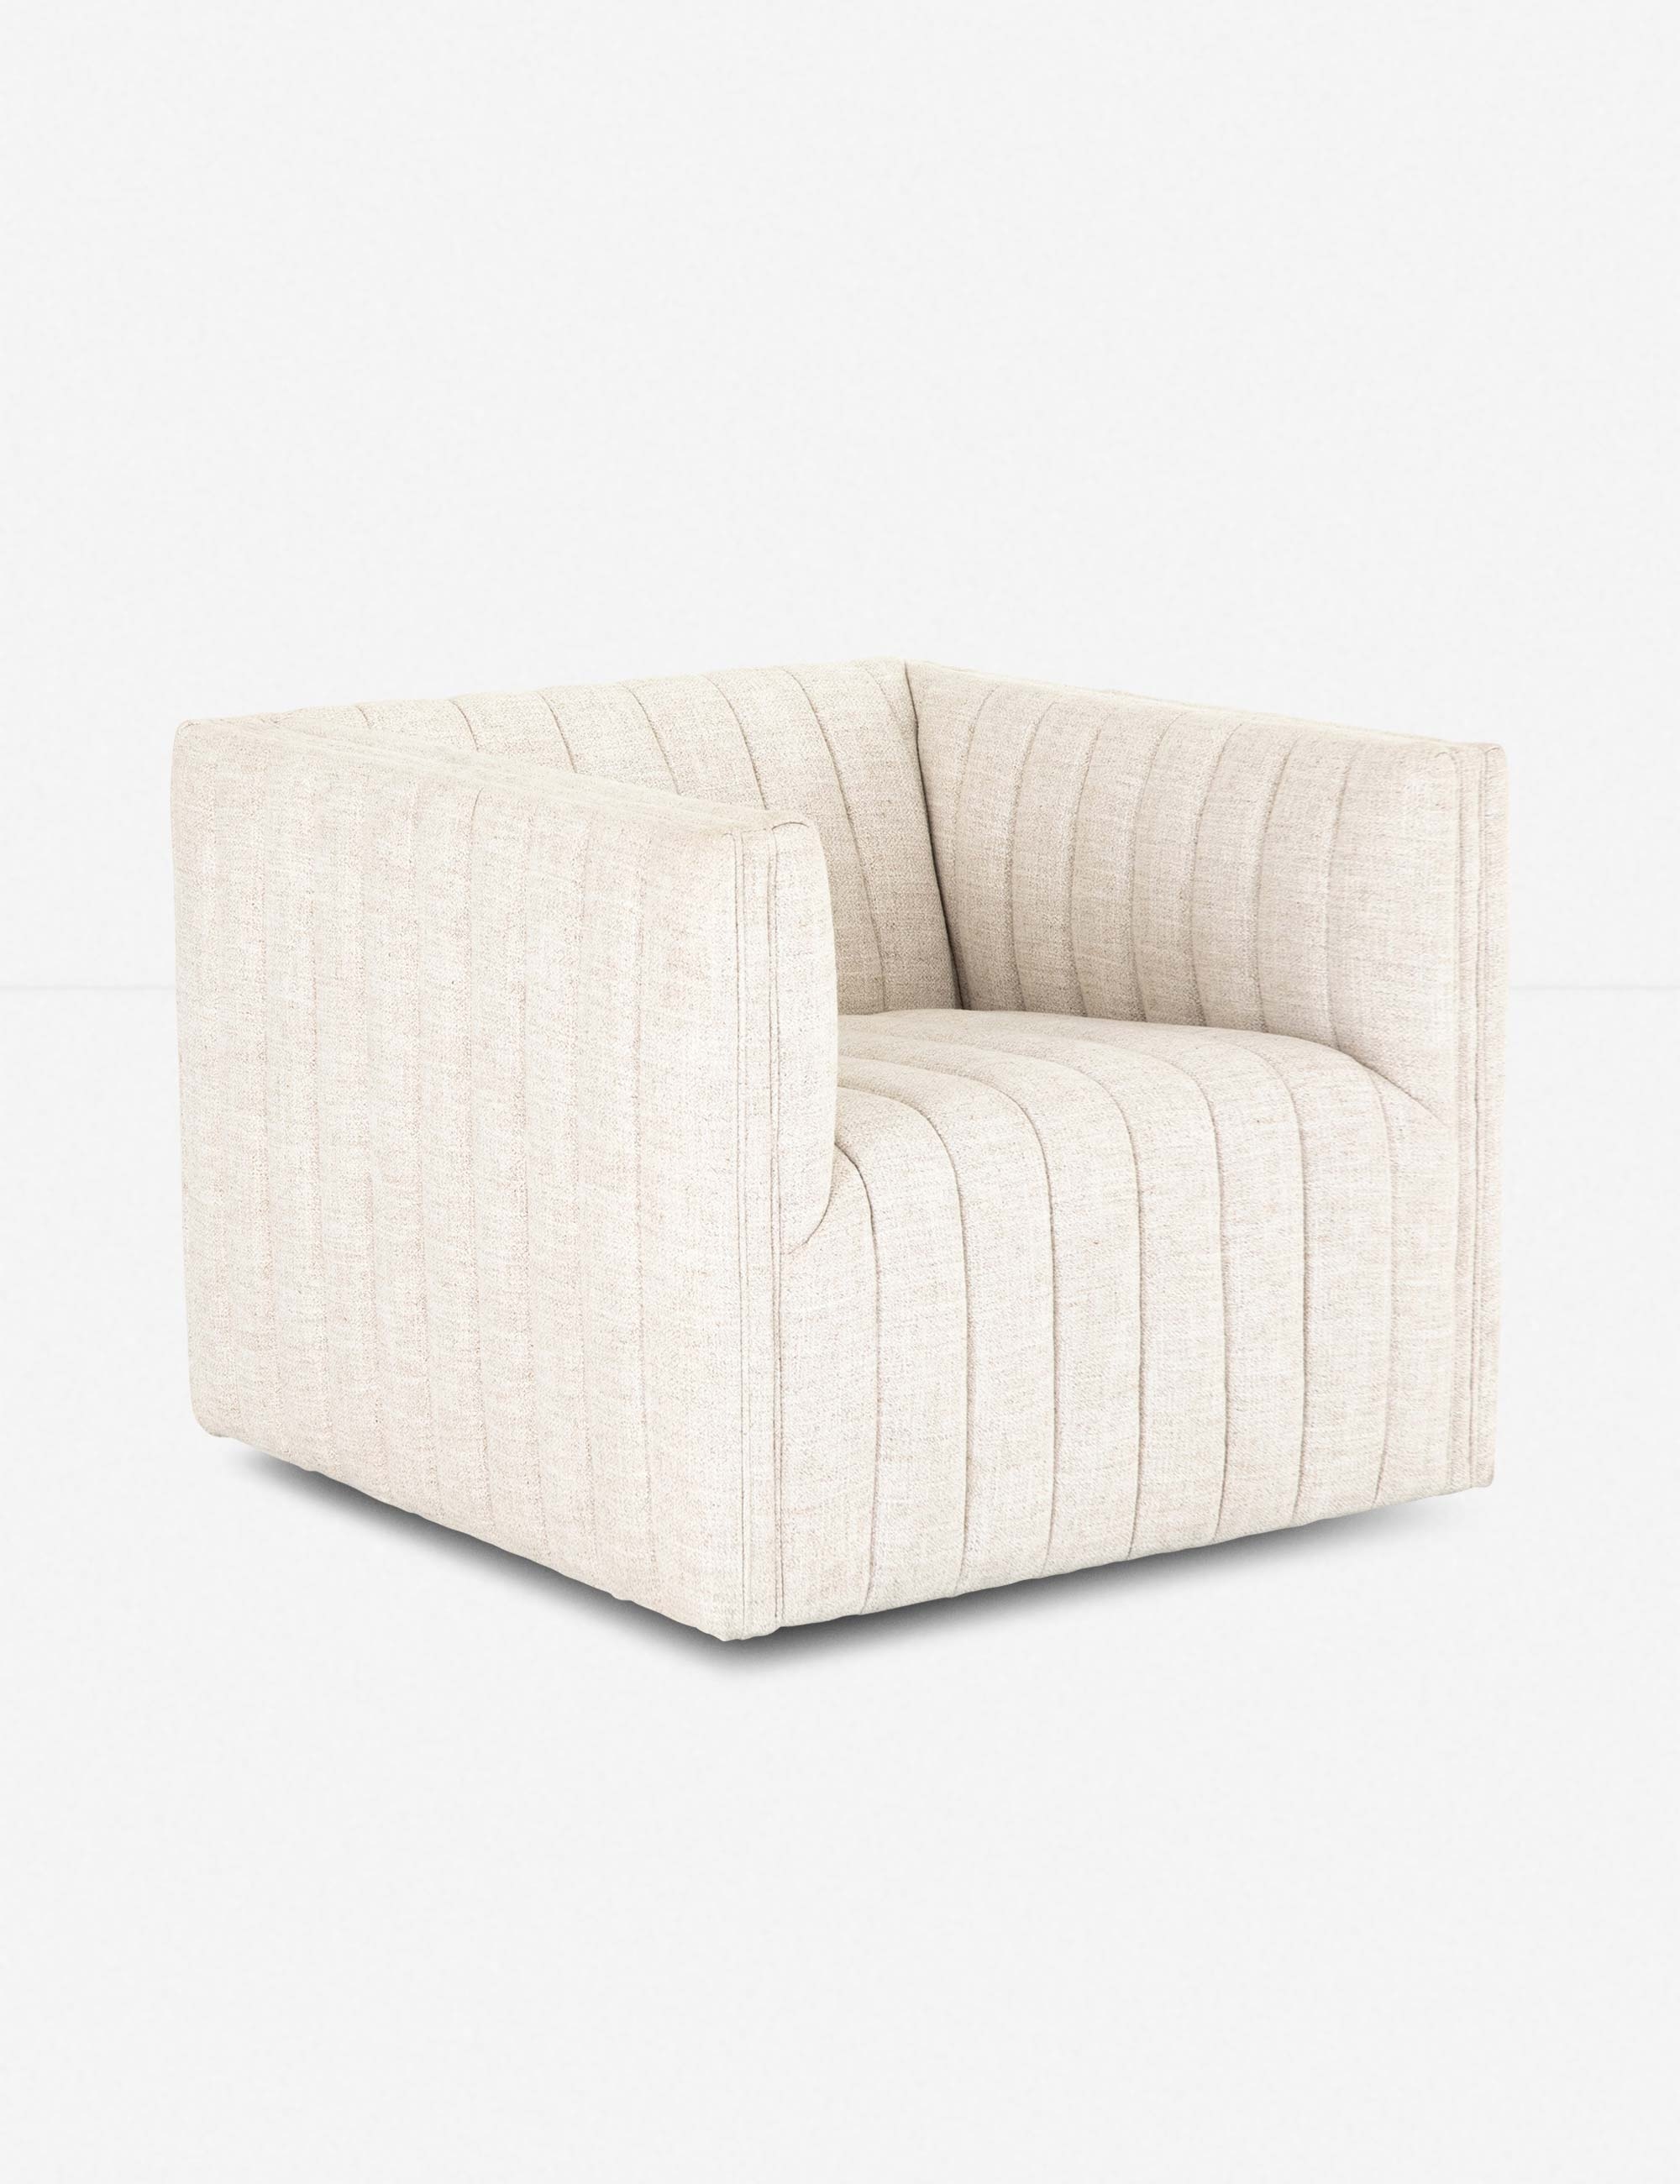 Roz Swivel Chair - Image 1